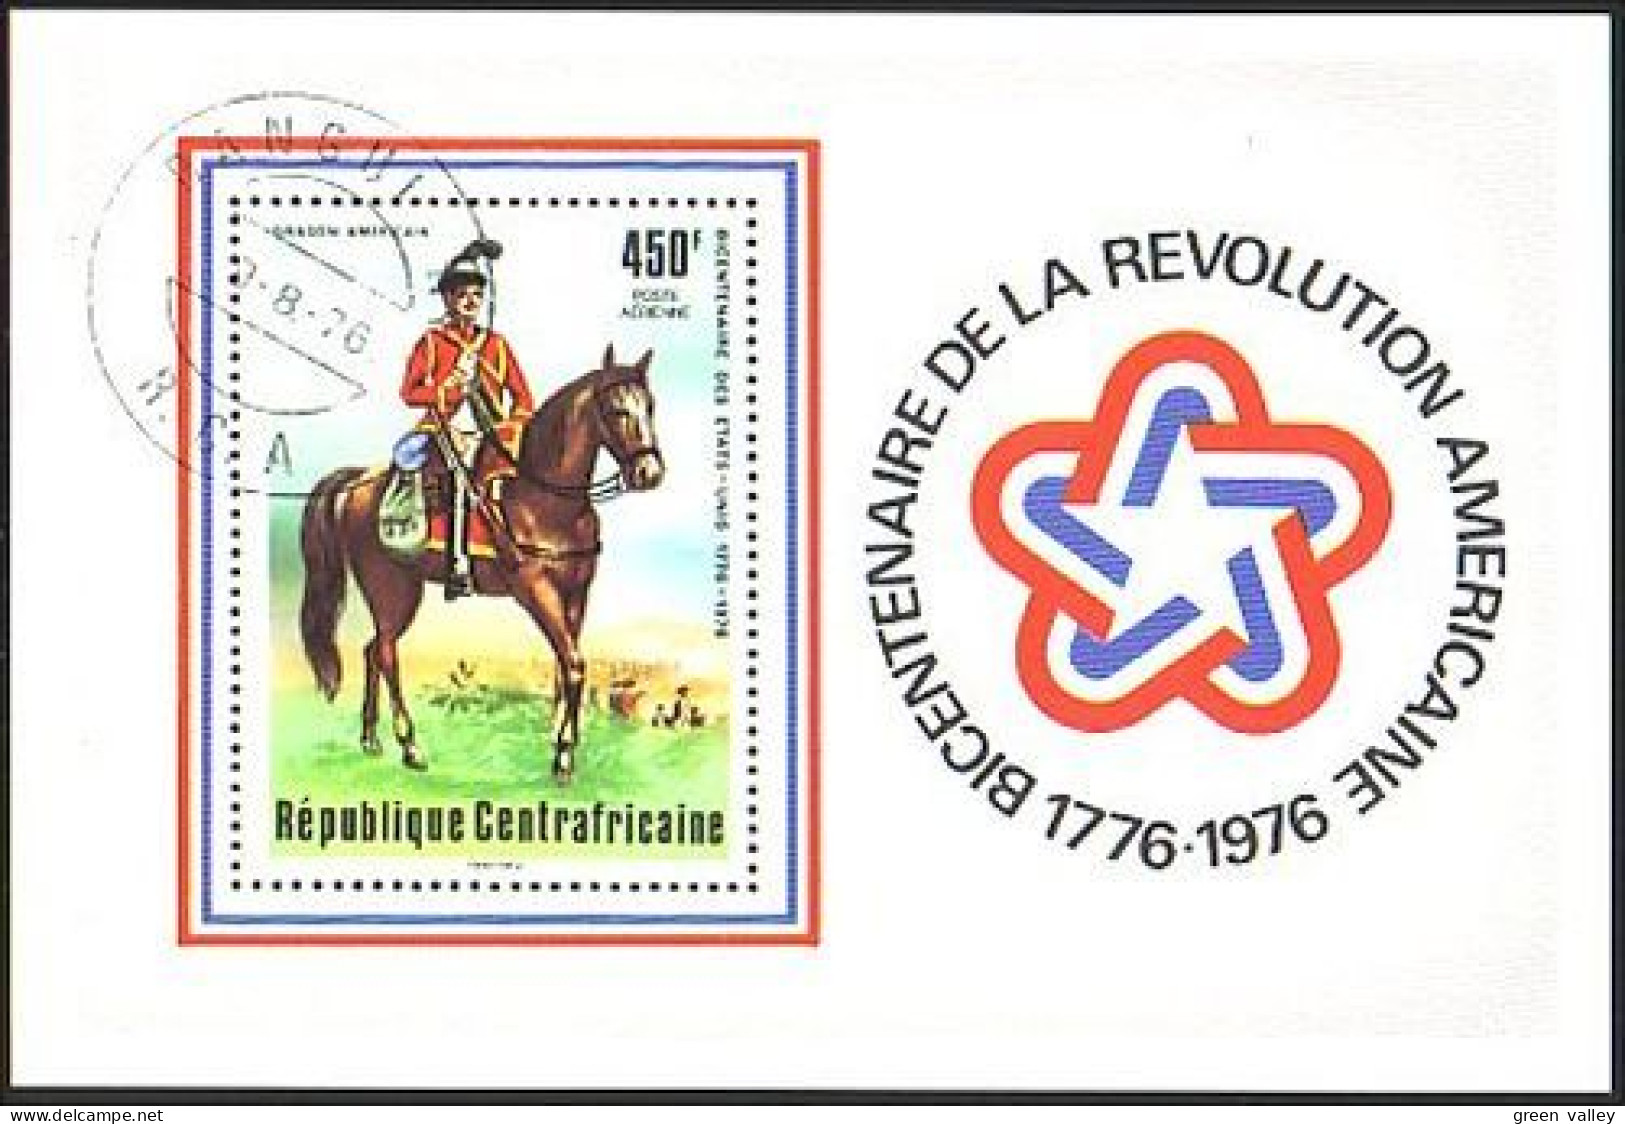 Centrafrique Revolution Americaine (A51-460b) - Onafhankelijkheid USA